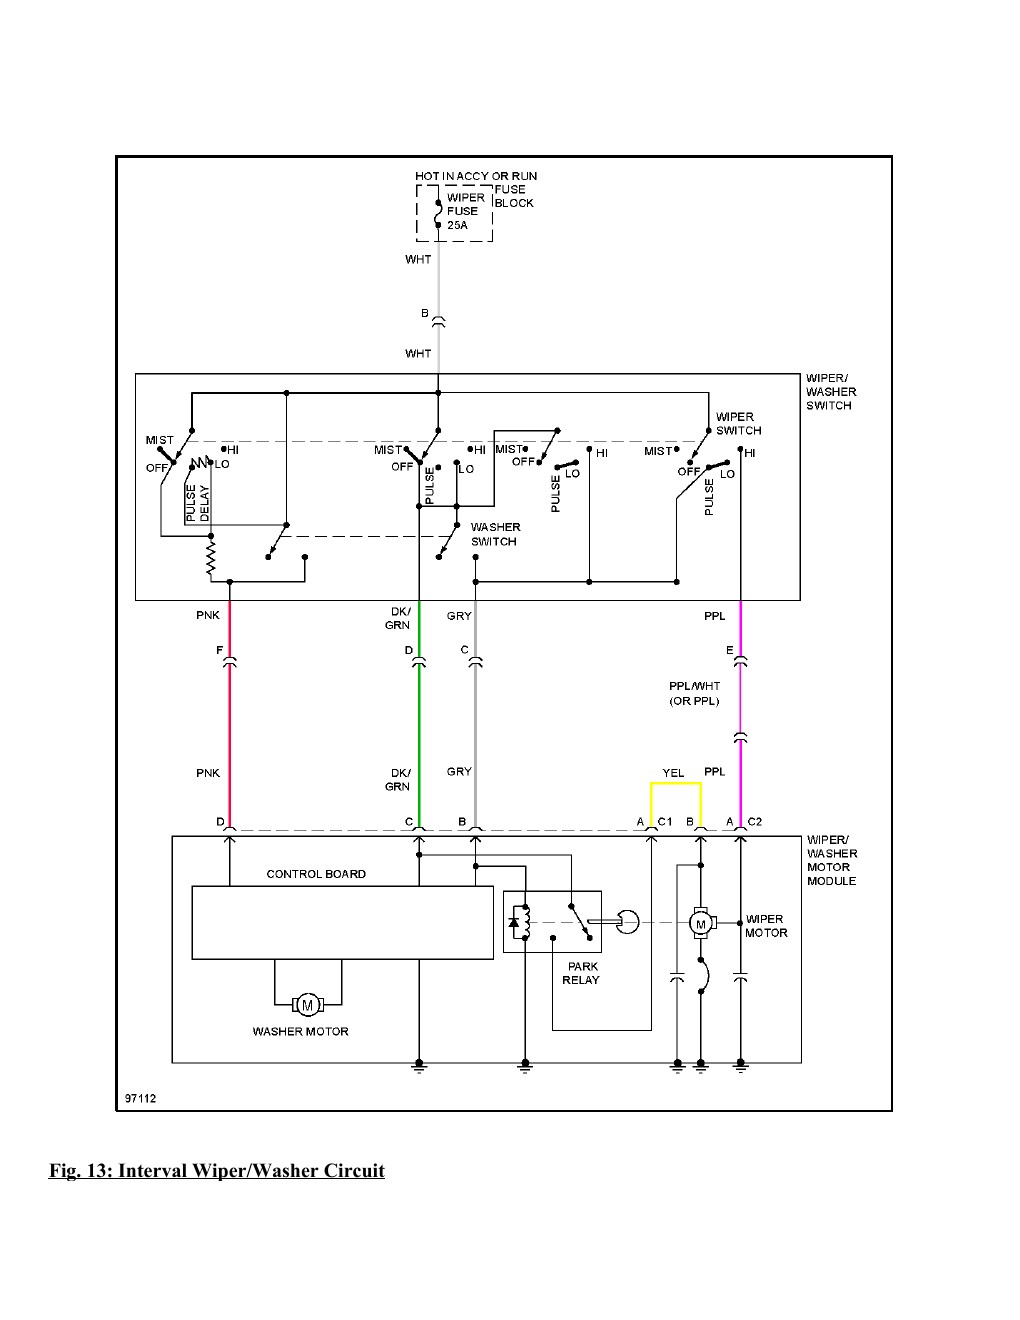 remote entry wiring diagram k1500